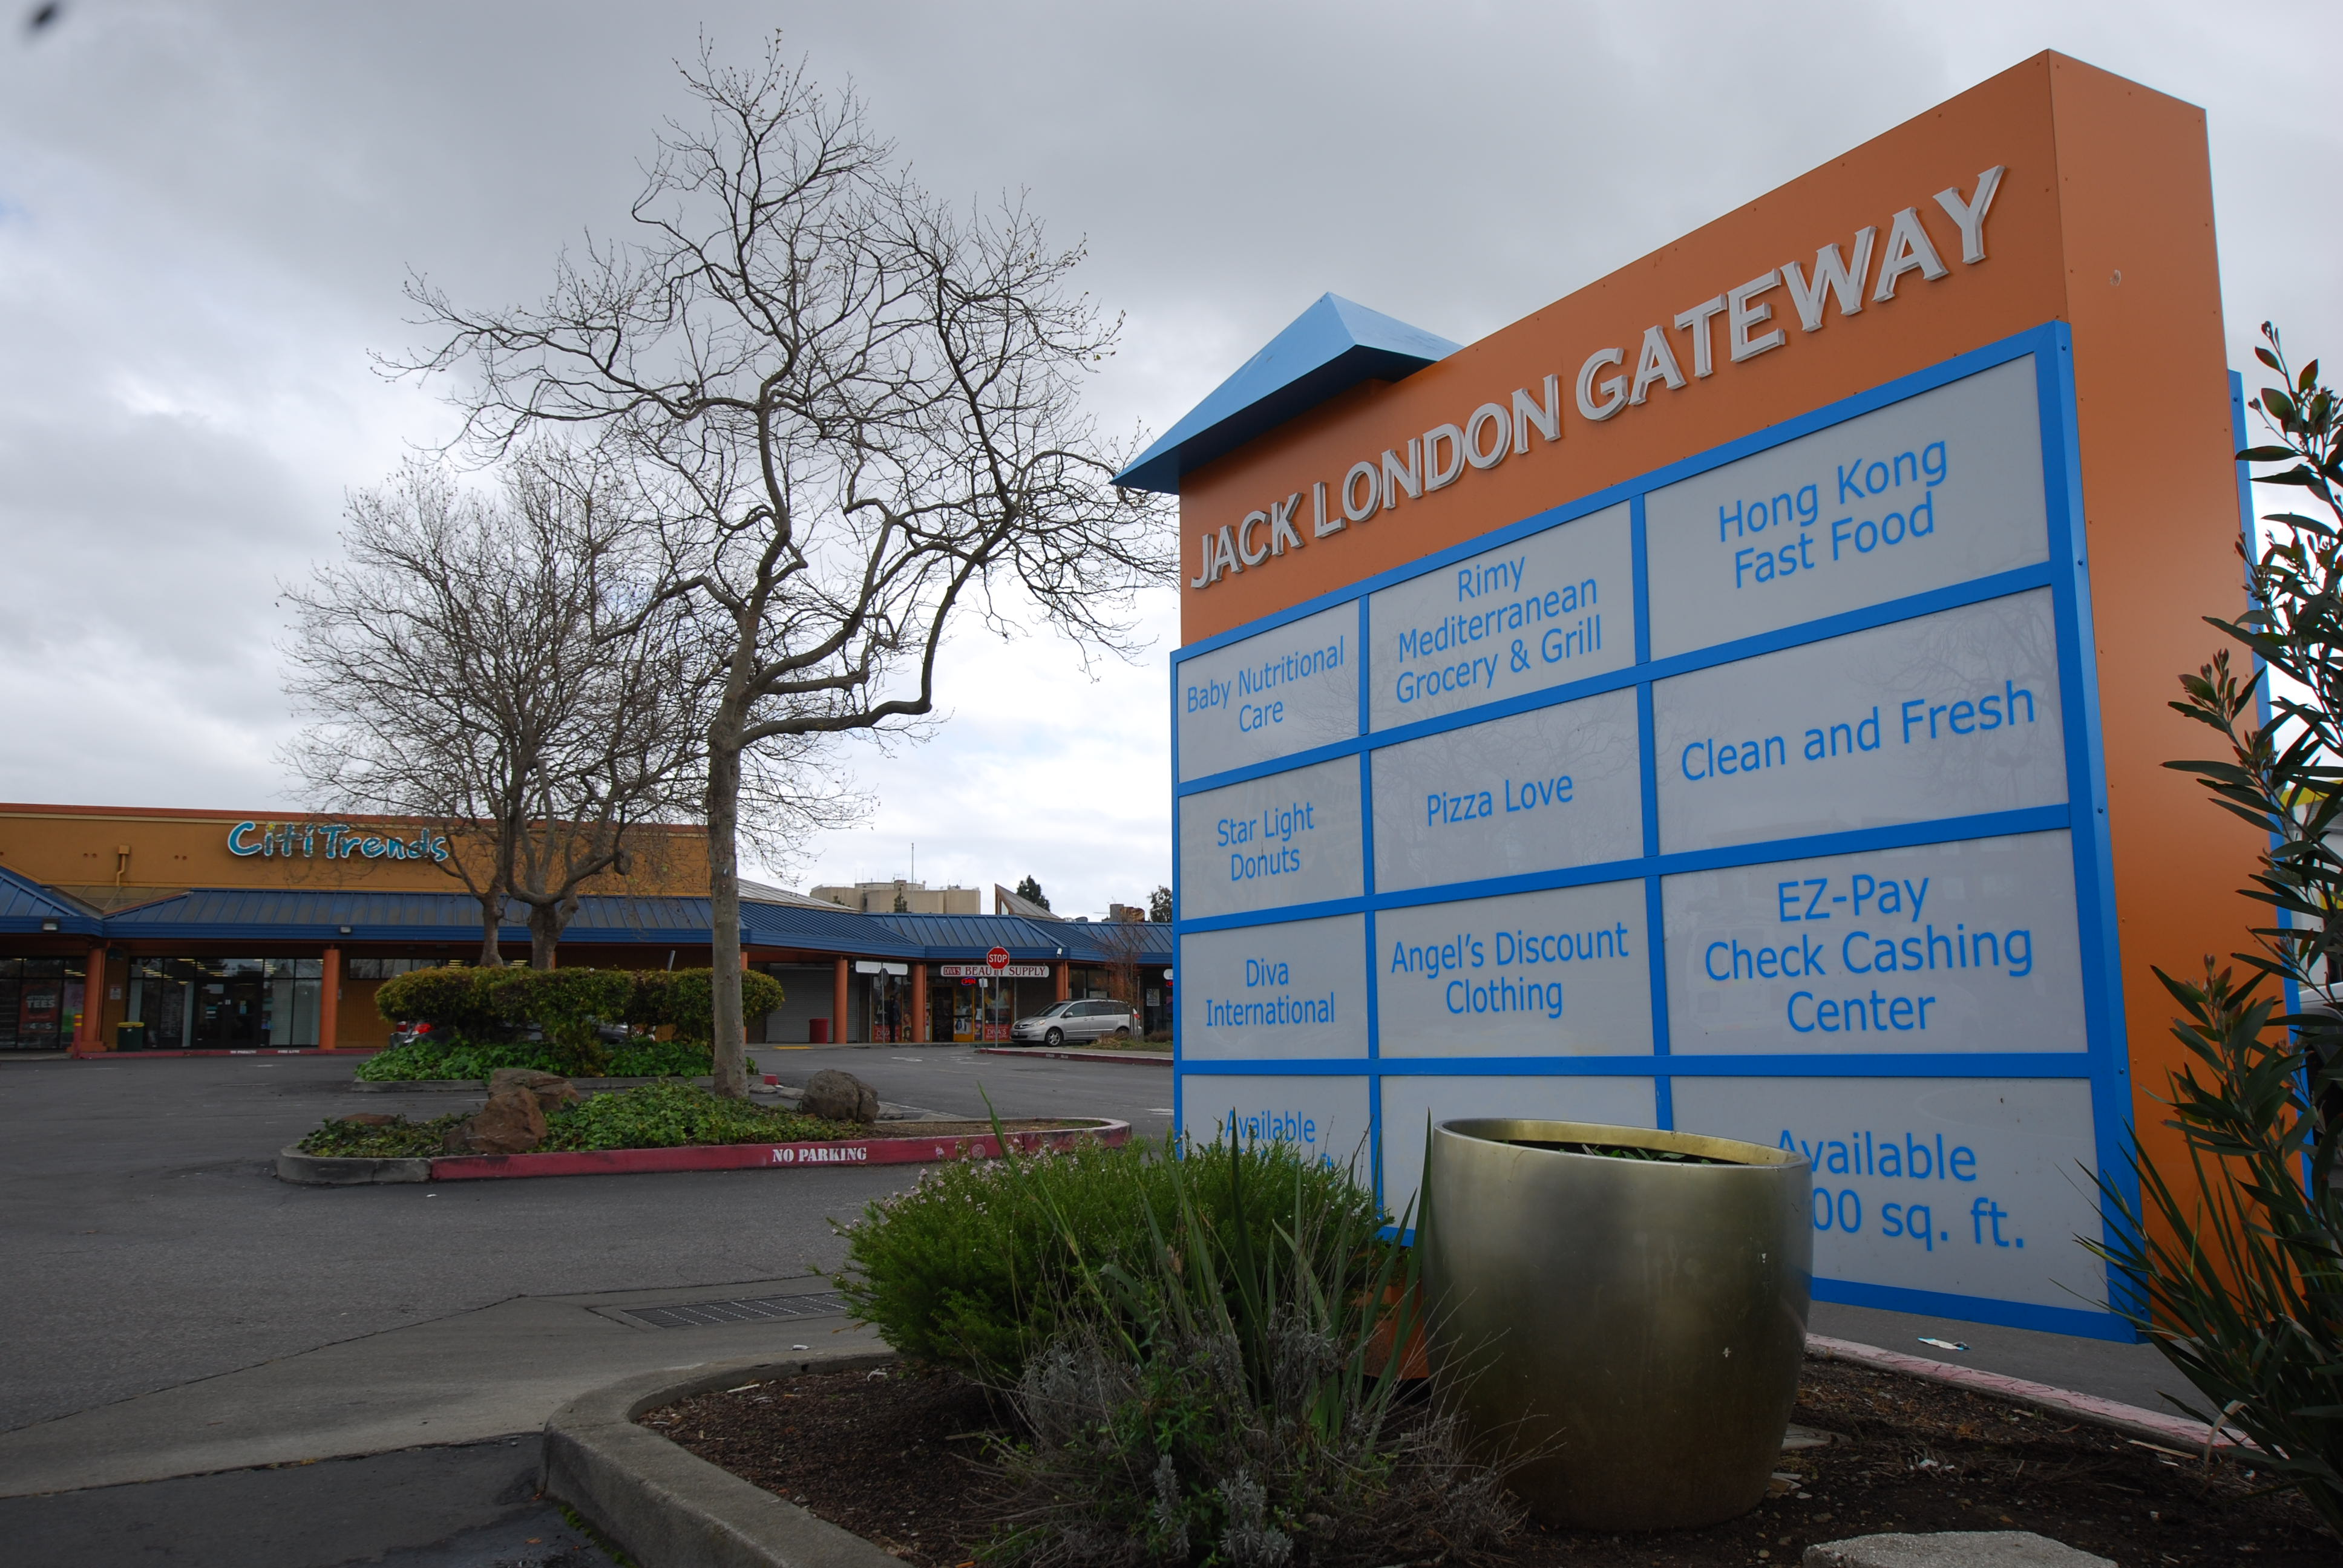 The Jack London Gateway shopping plaza in West Oakland. Photo by Scott Morris.